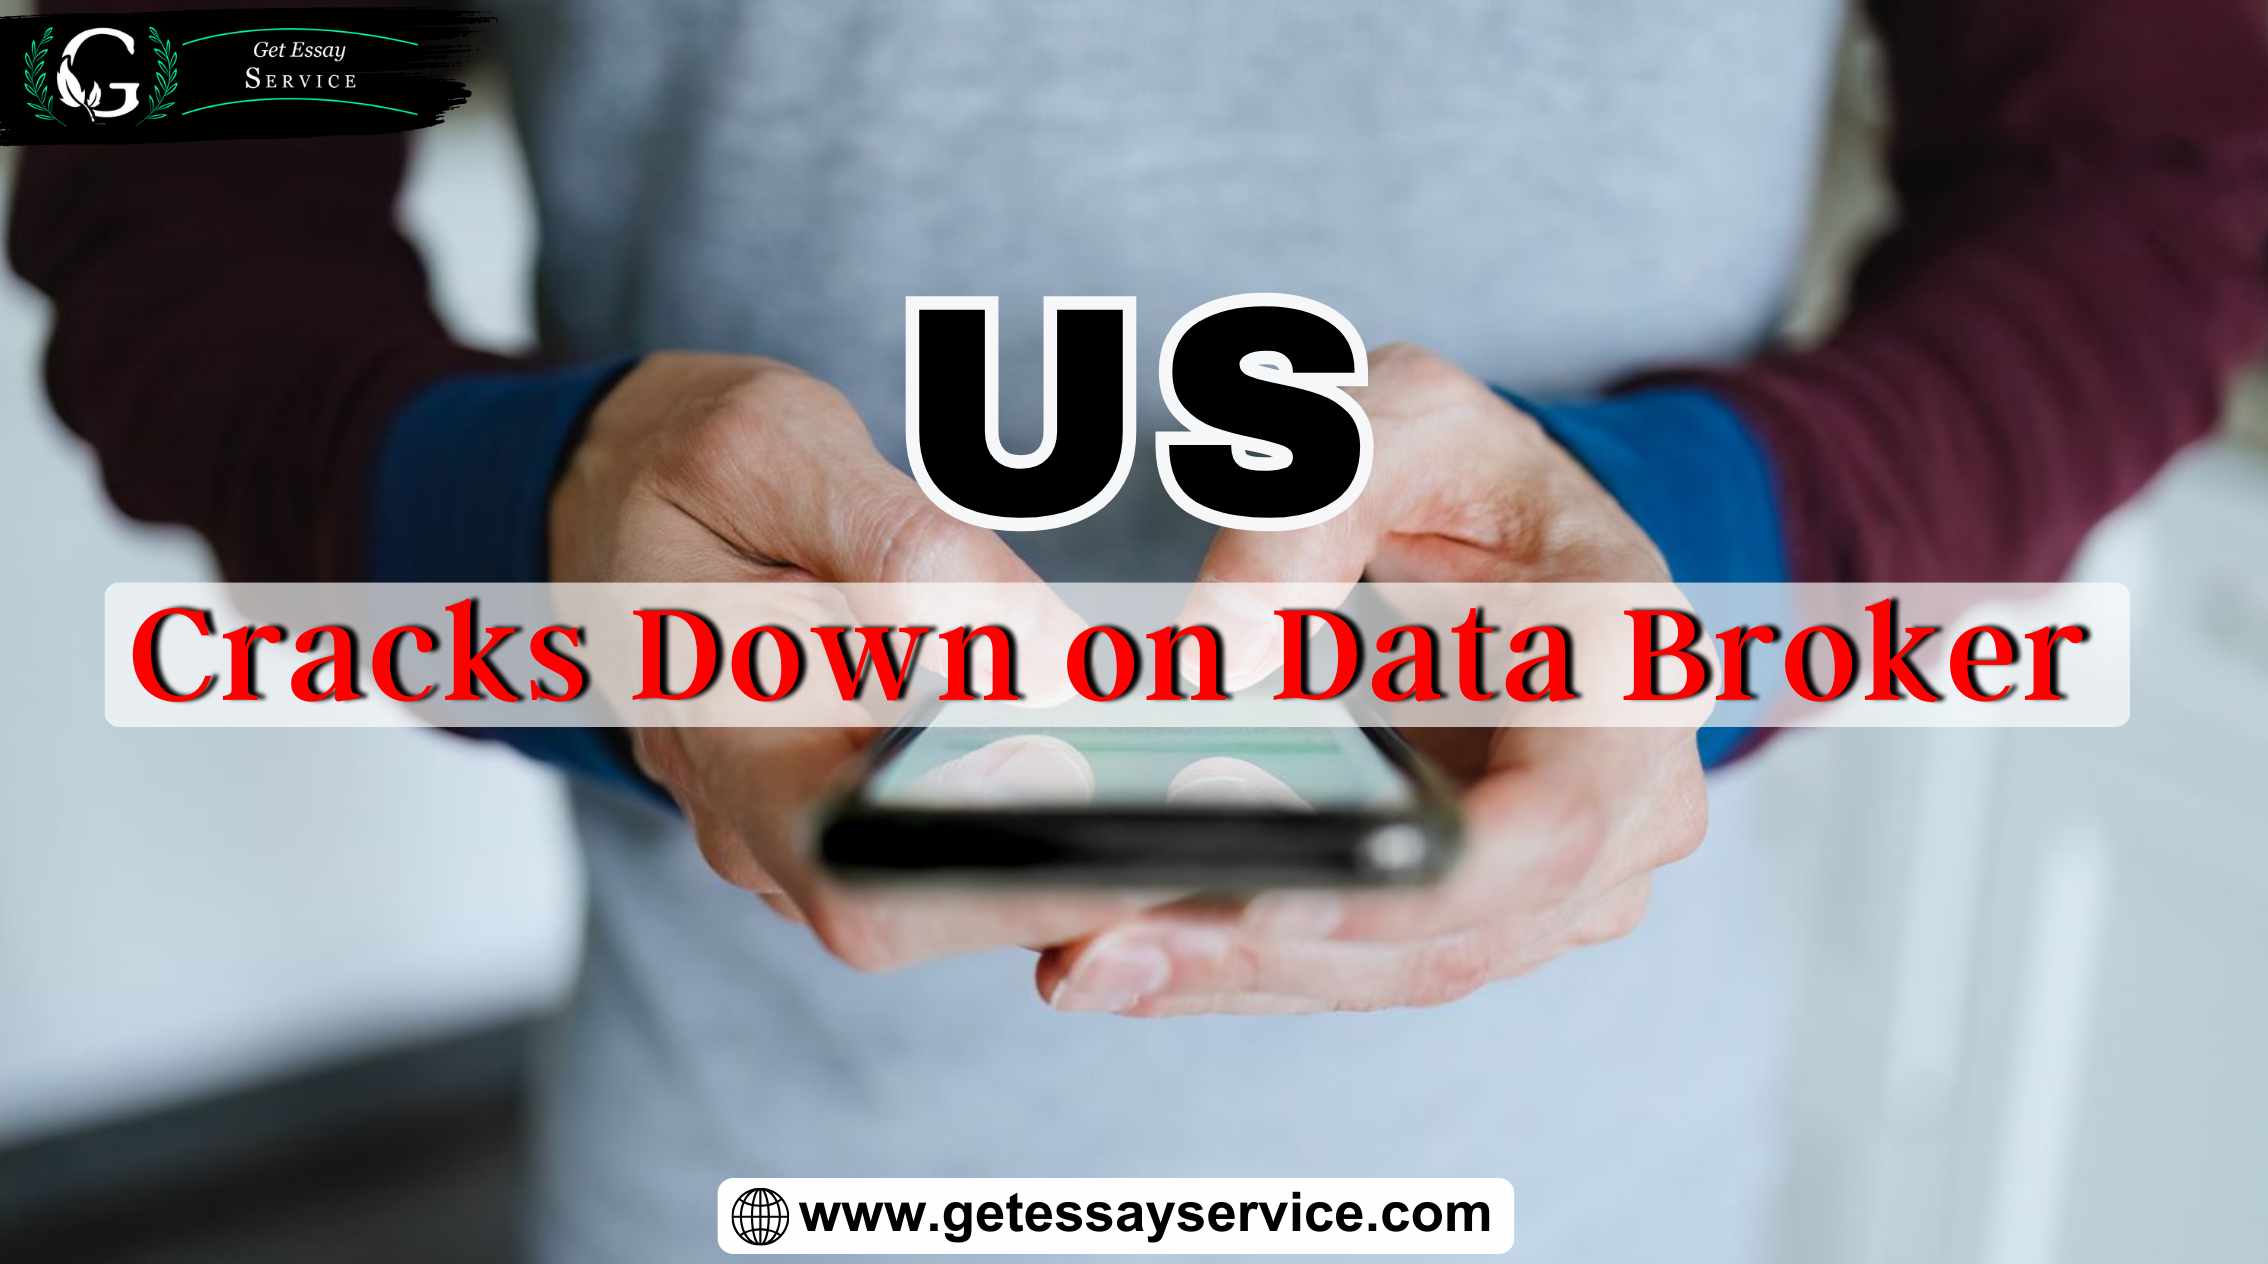 The Us Cracks Down On Data Brokering